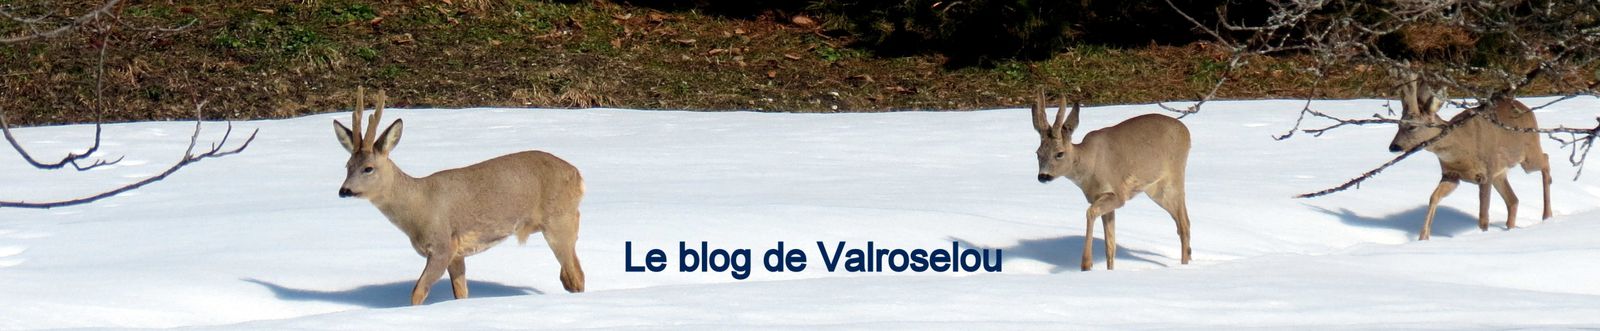 Le blog de Valroselou